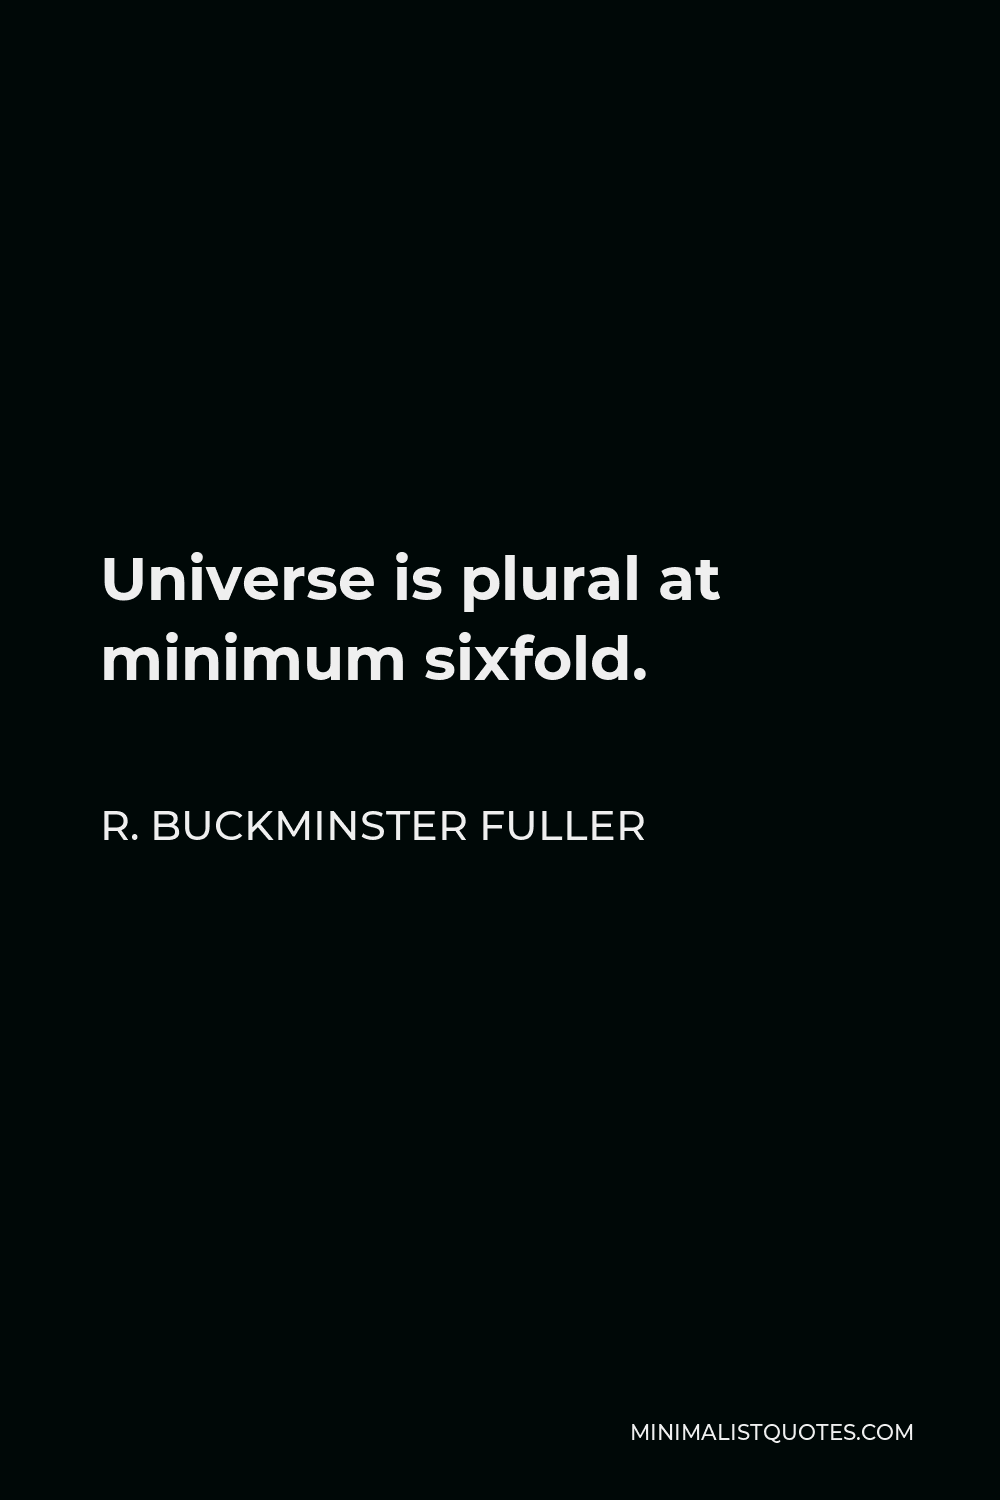 R. Buckminster Fuller Quote - Universe is plural at minimum sixfold.